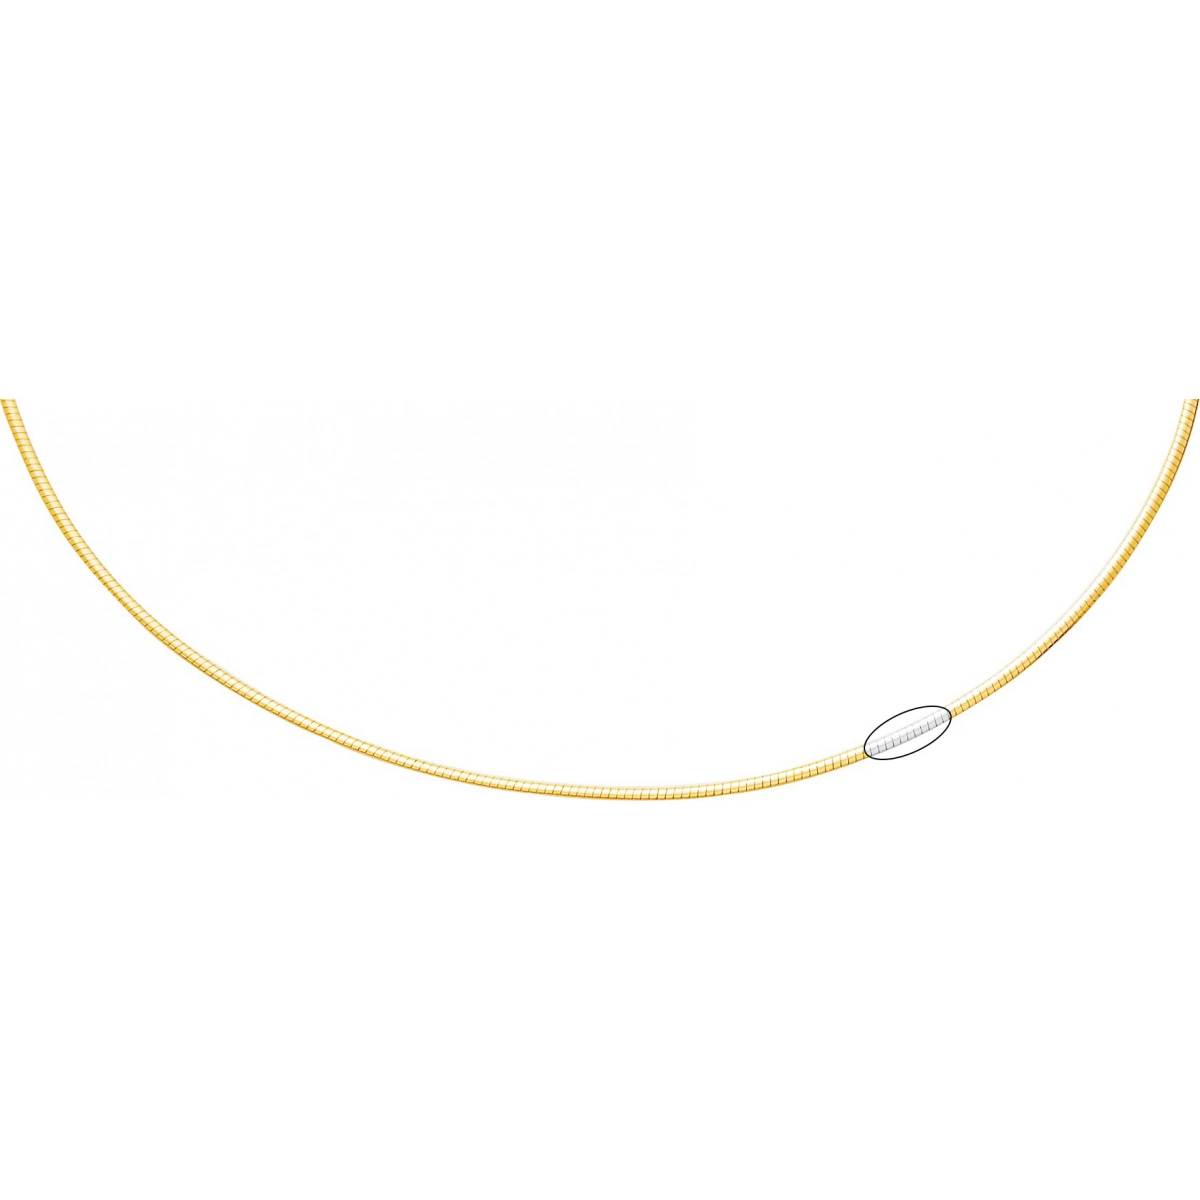 Necklace chain 'Avvolto' reversible 18K 2TG - Size: 45  Lua Blanca  2263.3.45